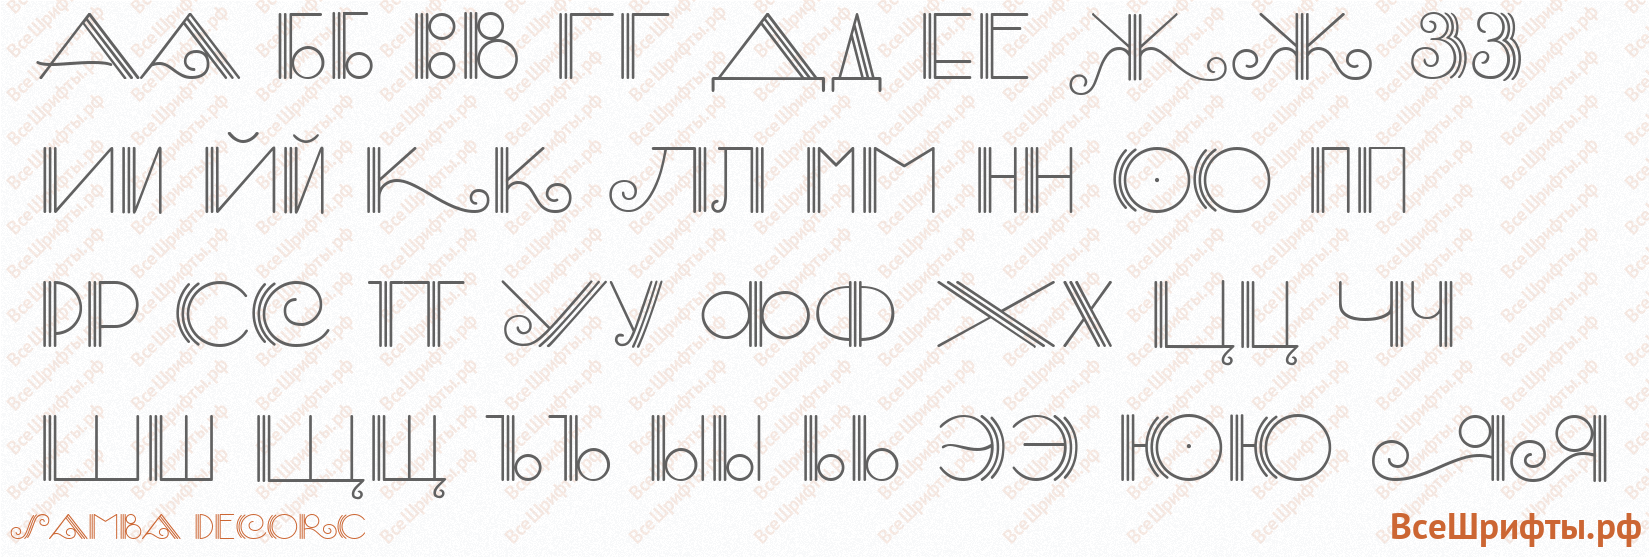 Шрифт Samba DecorC с русскими буквами